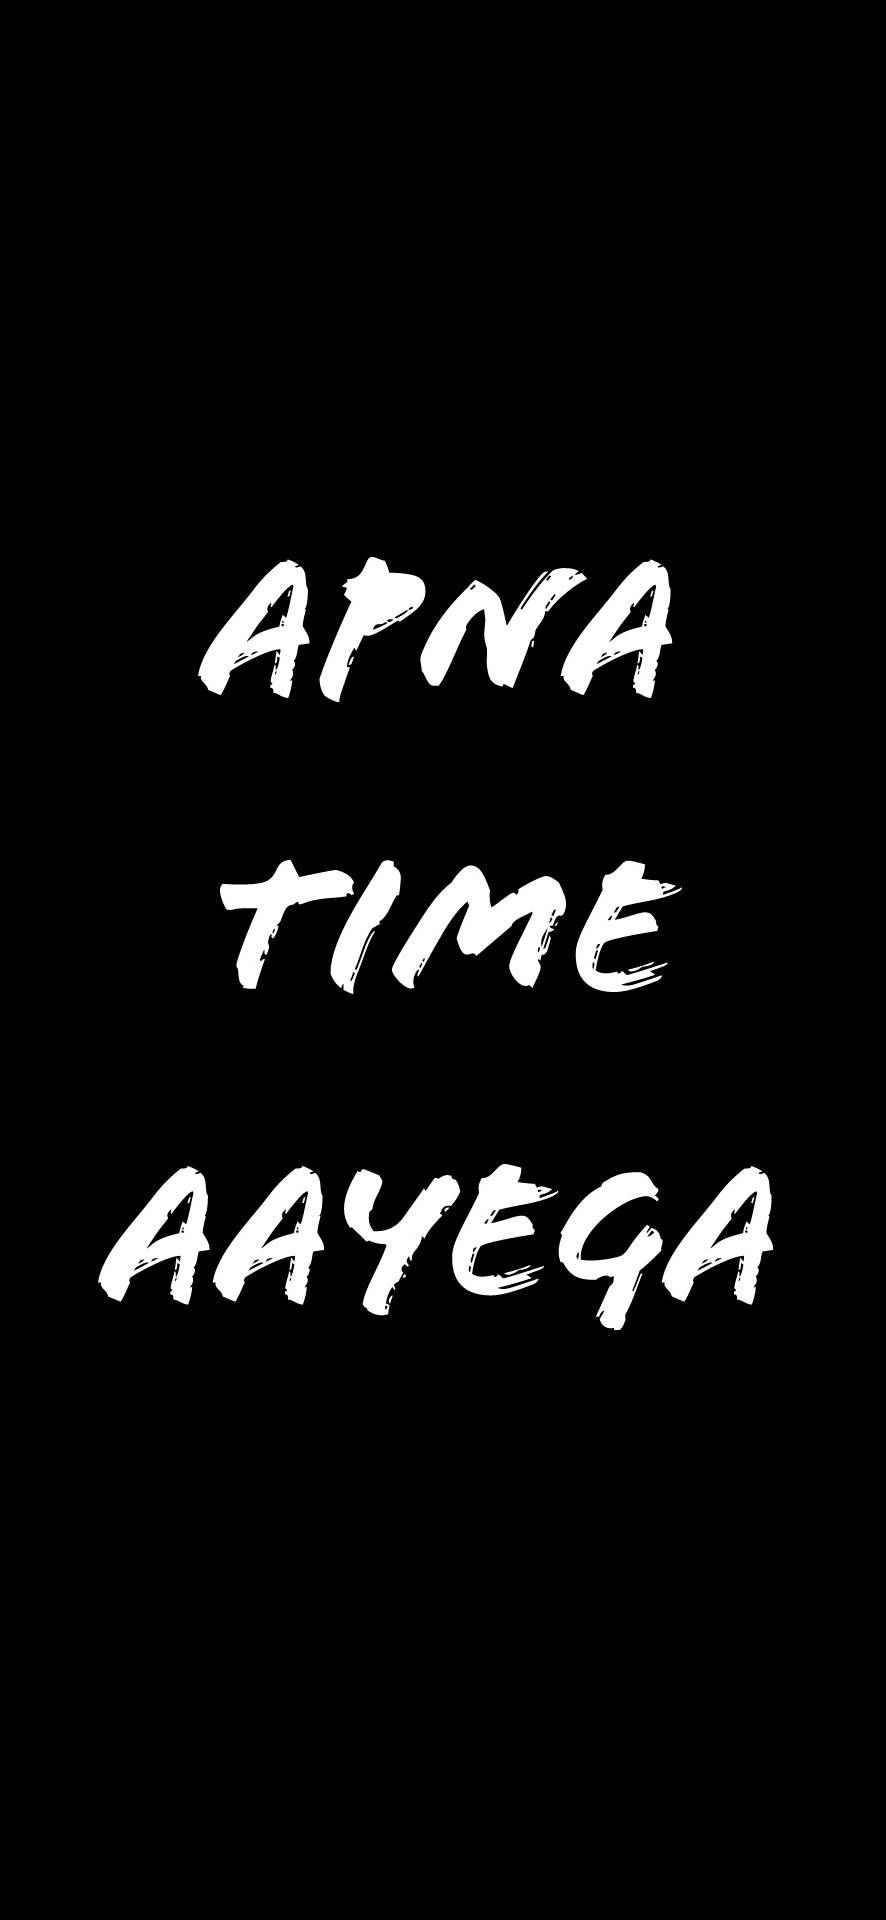 Apna Time Aayega Wallpaper